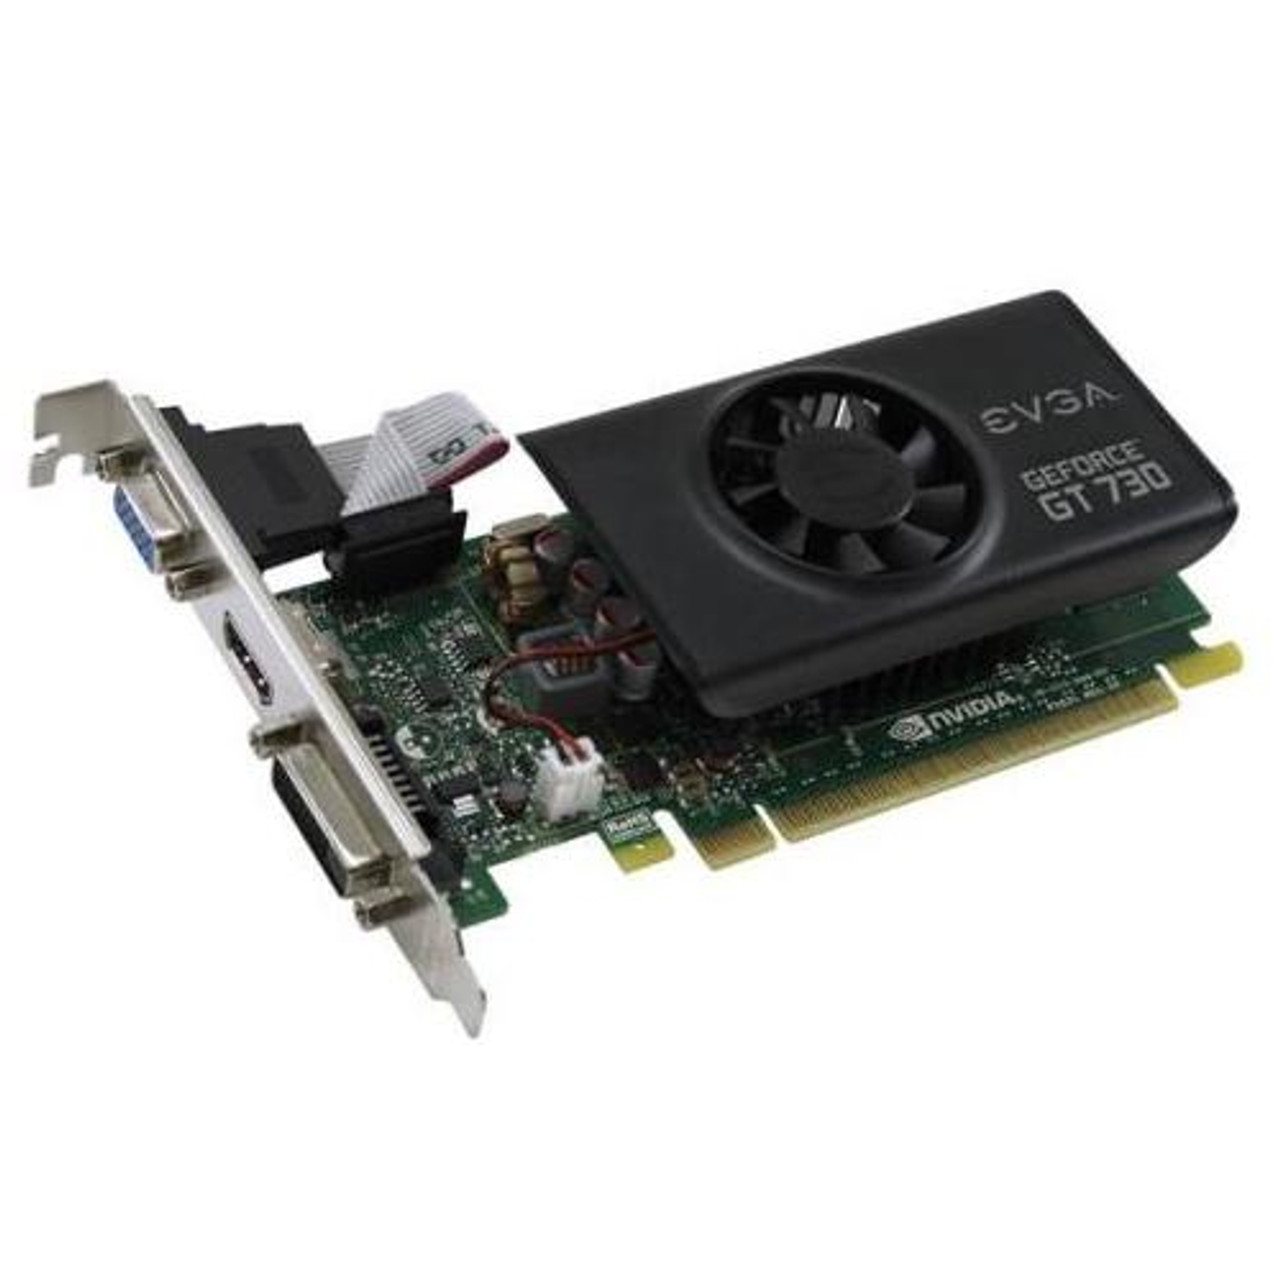 01G-P3-3731-KR EVGA GeForce GT 730 1GB 64-Bit GDDR5 PCI Express 2.0 DVI-D/ HDMI Low Profile Video Graphics